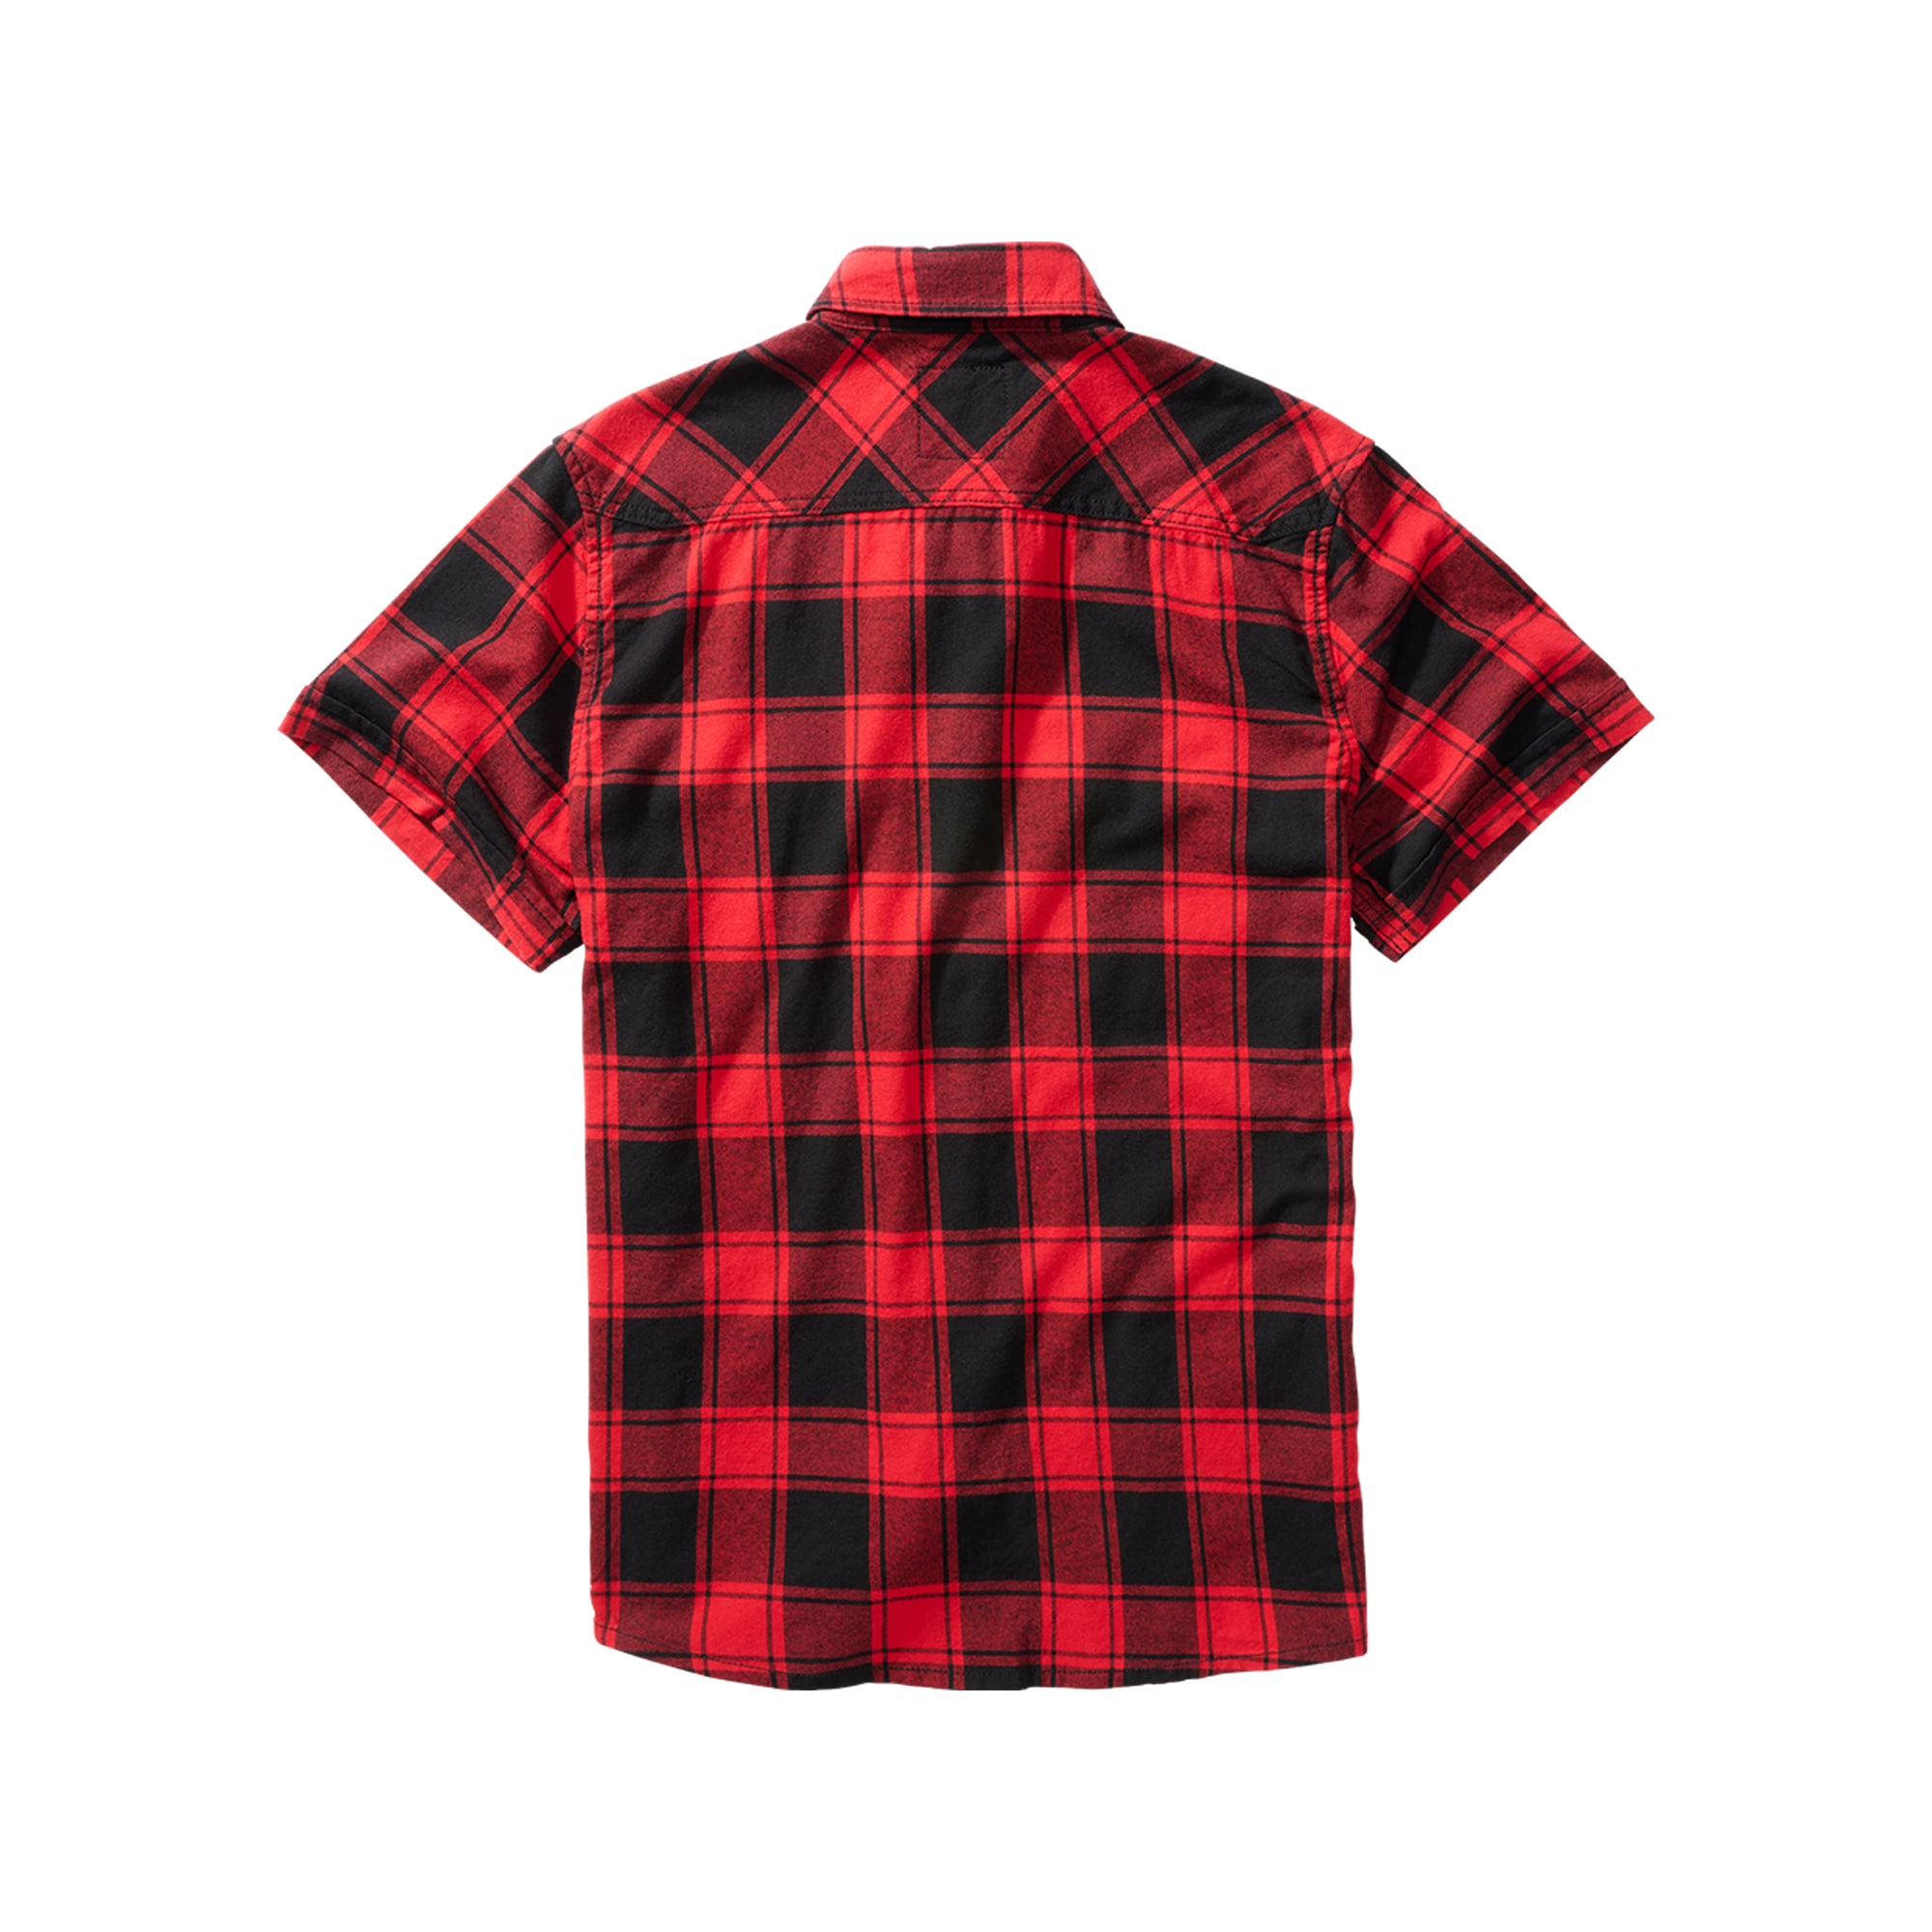 Purchase the Brandit Check Shirt Half Sleeve red/black by ASMC